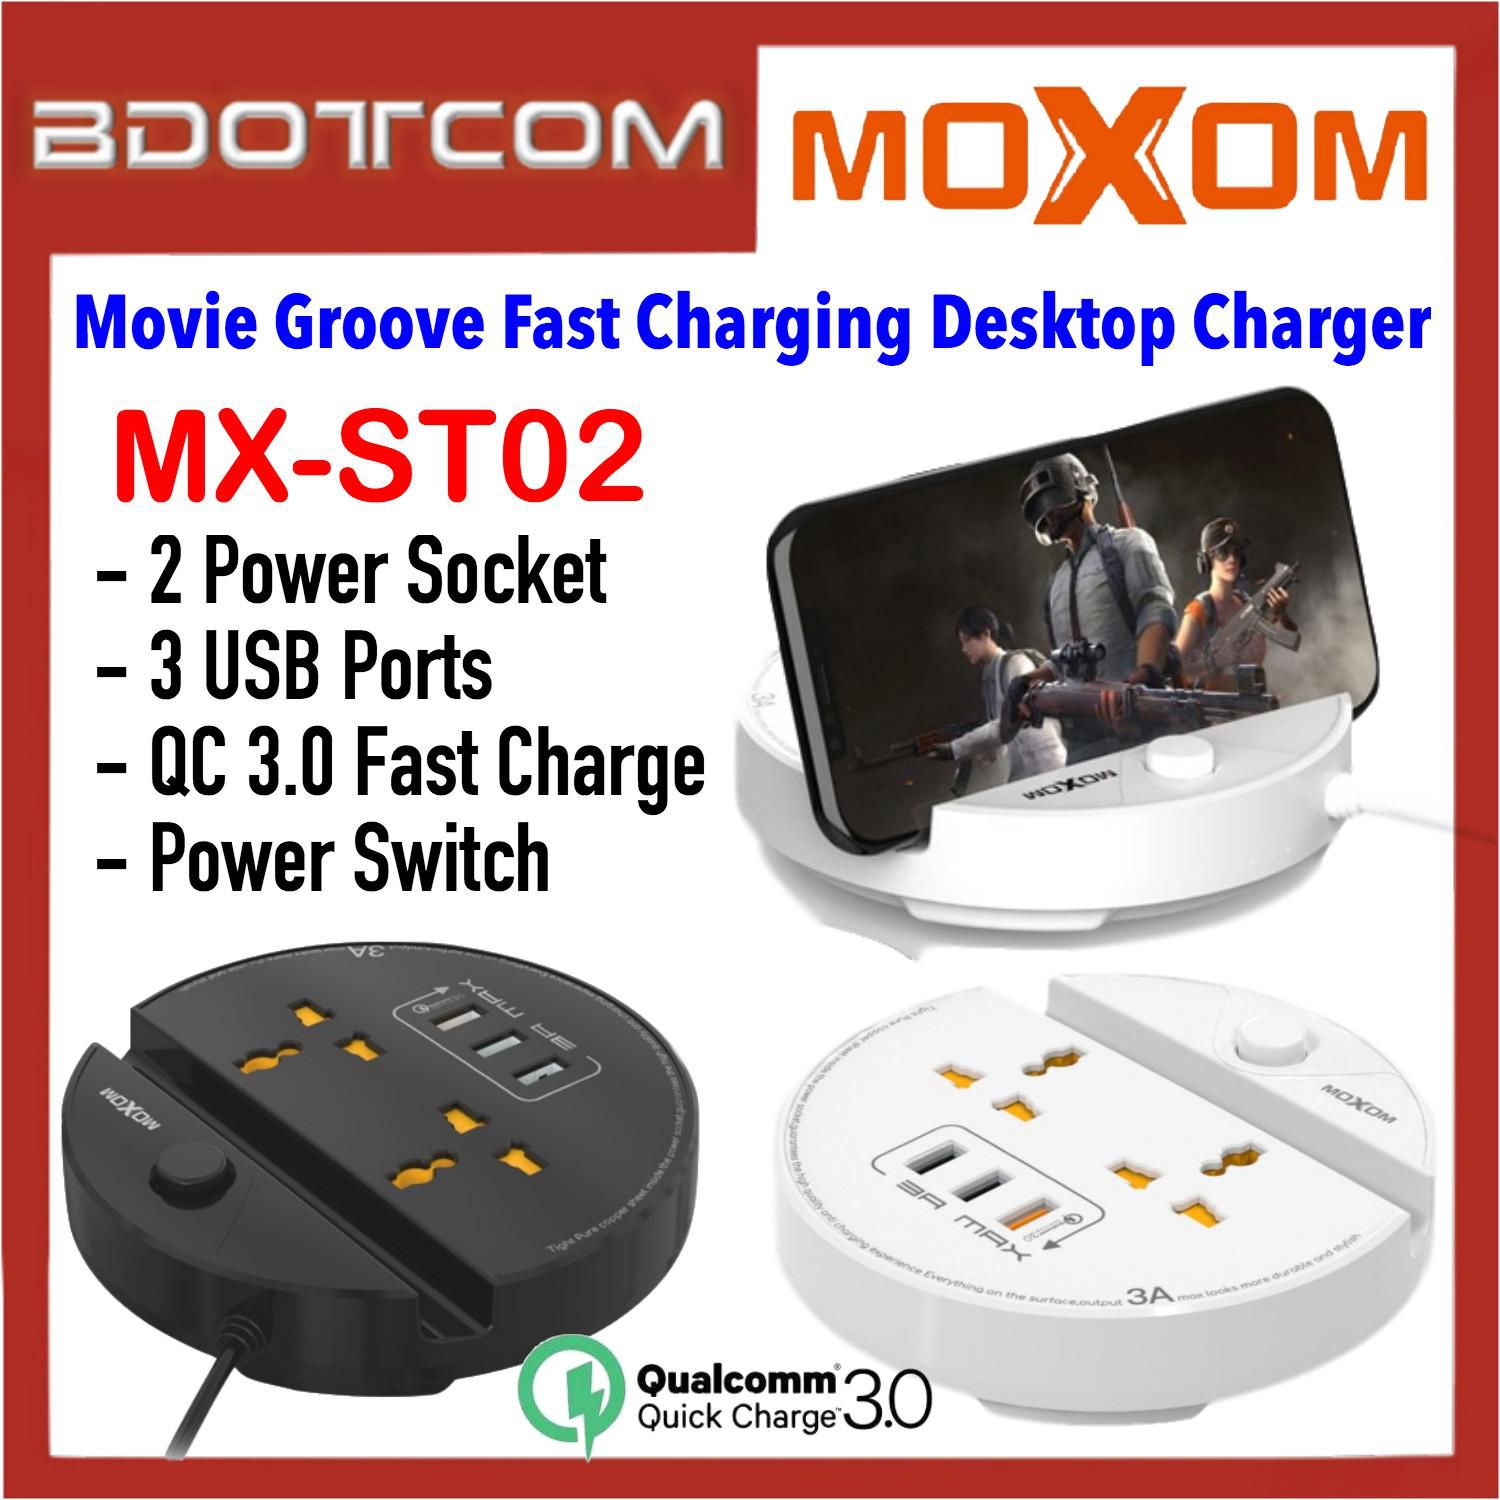 Moxom Movie Groove 2 Socket + 3 Ports Samsung Desktop Charger MX-ST02